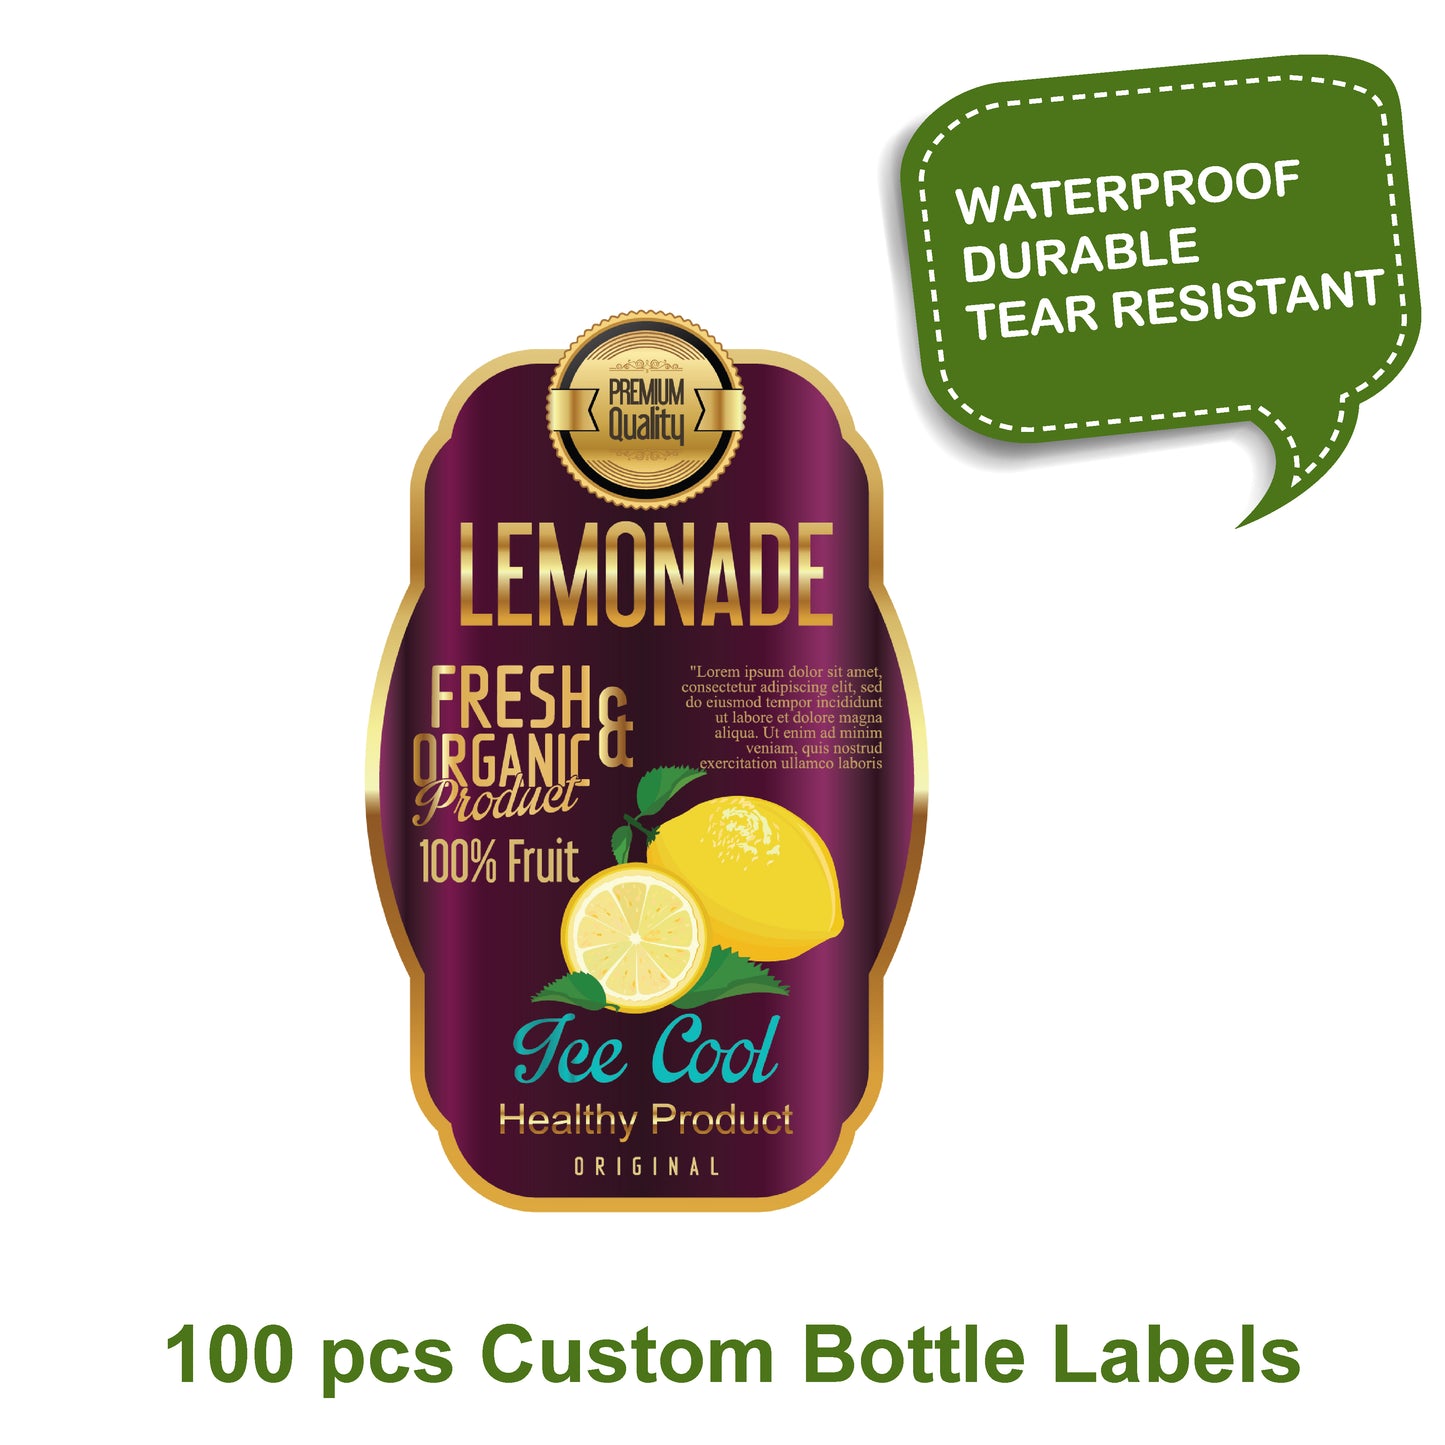 Lemonade label, 100 pcs Custom bottle labels, custom maple syrup label, custom label, custom candle label, custom product label, labels